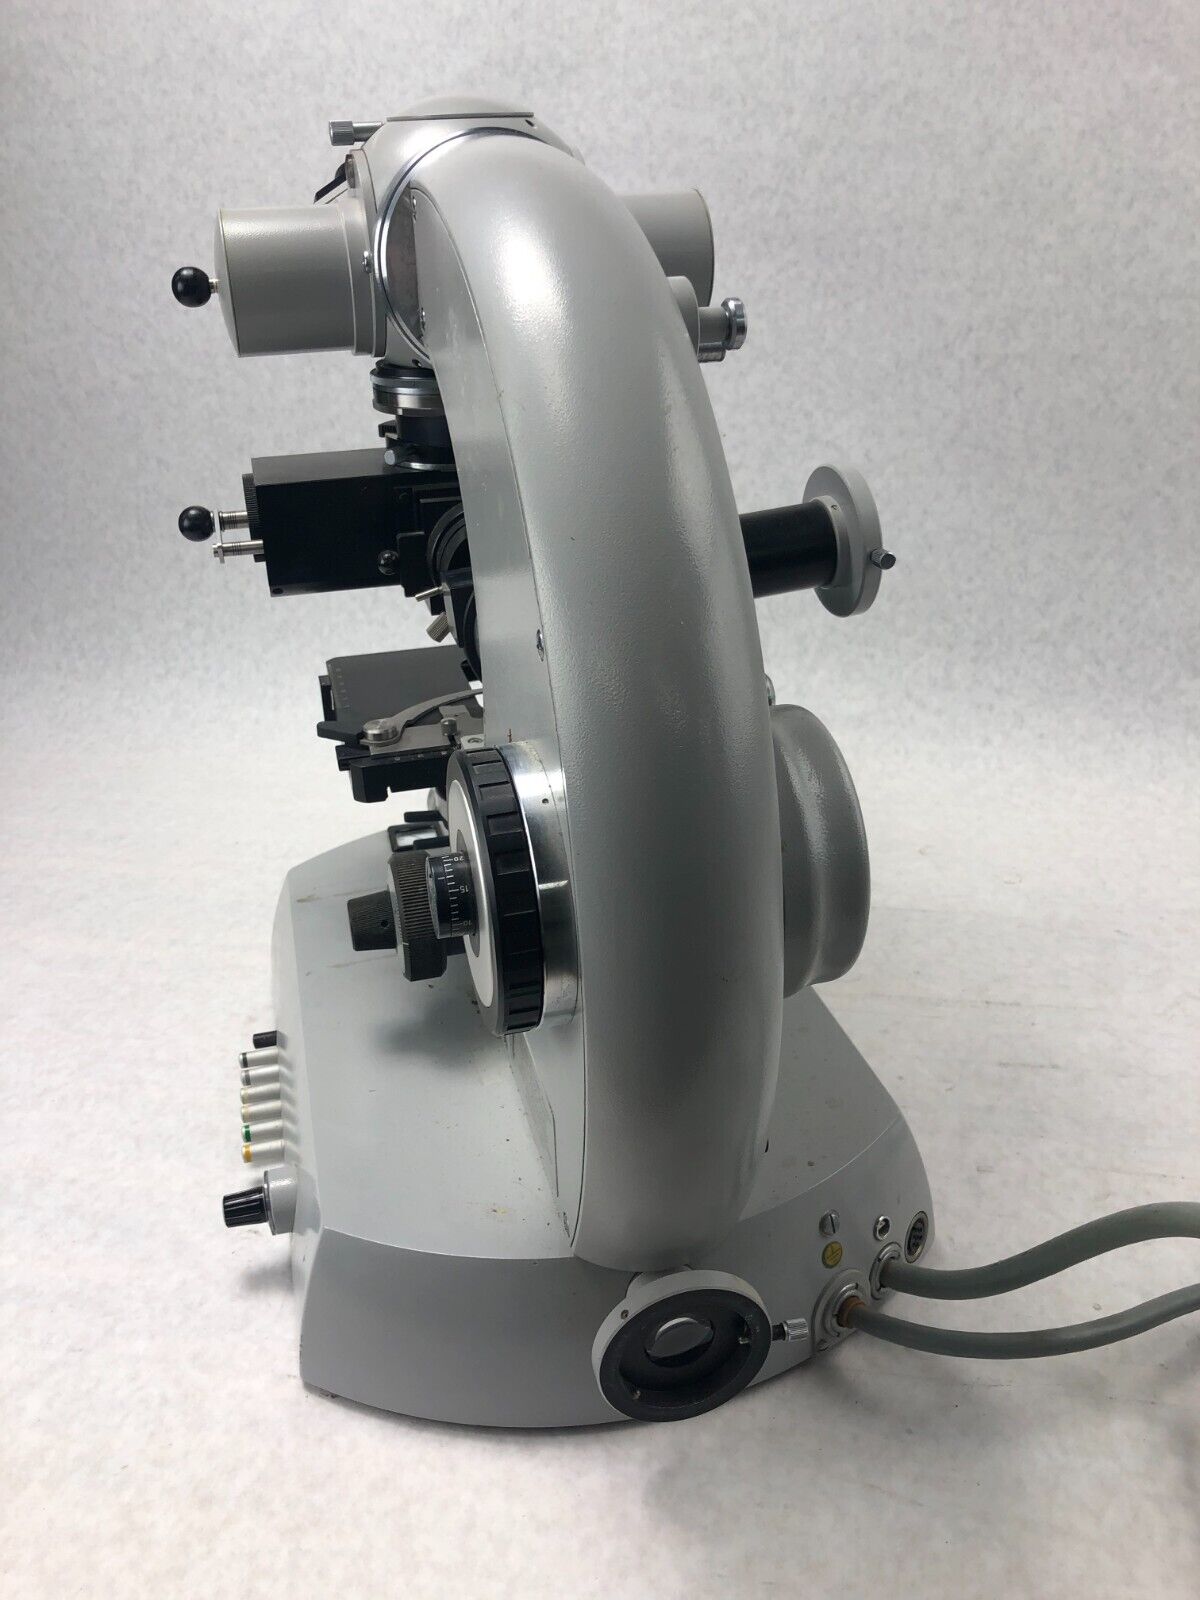 Carl Zeiss 472190-0000/14 Microscope Vorsicht III RS Germany